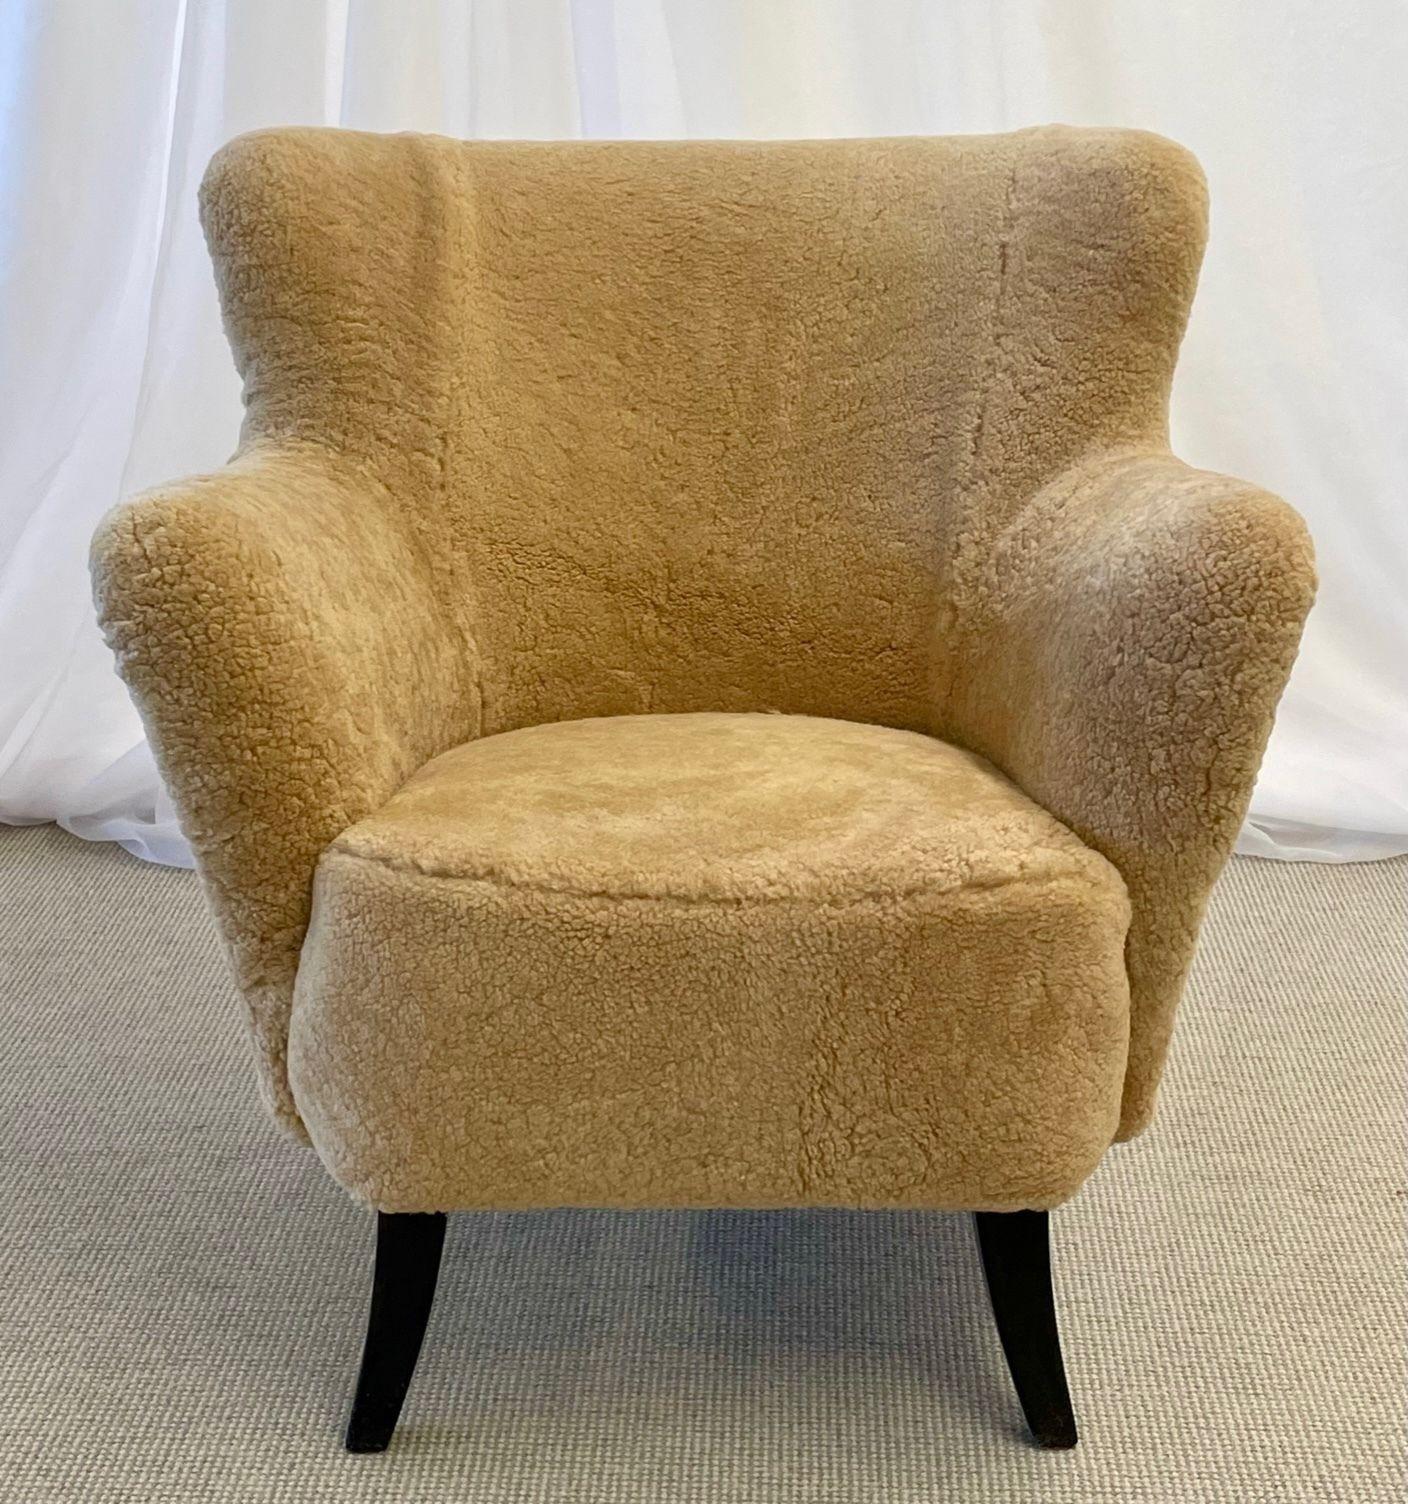 Danish Mid-Century Modern, Lounge Chairs, Sheepskin, Ebonized Wood, 1950s For Sale 1